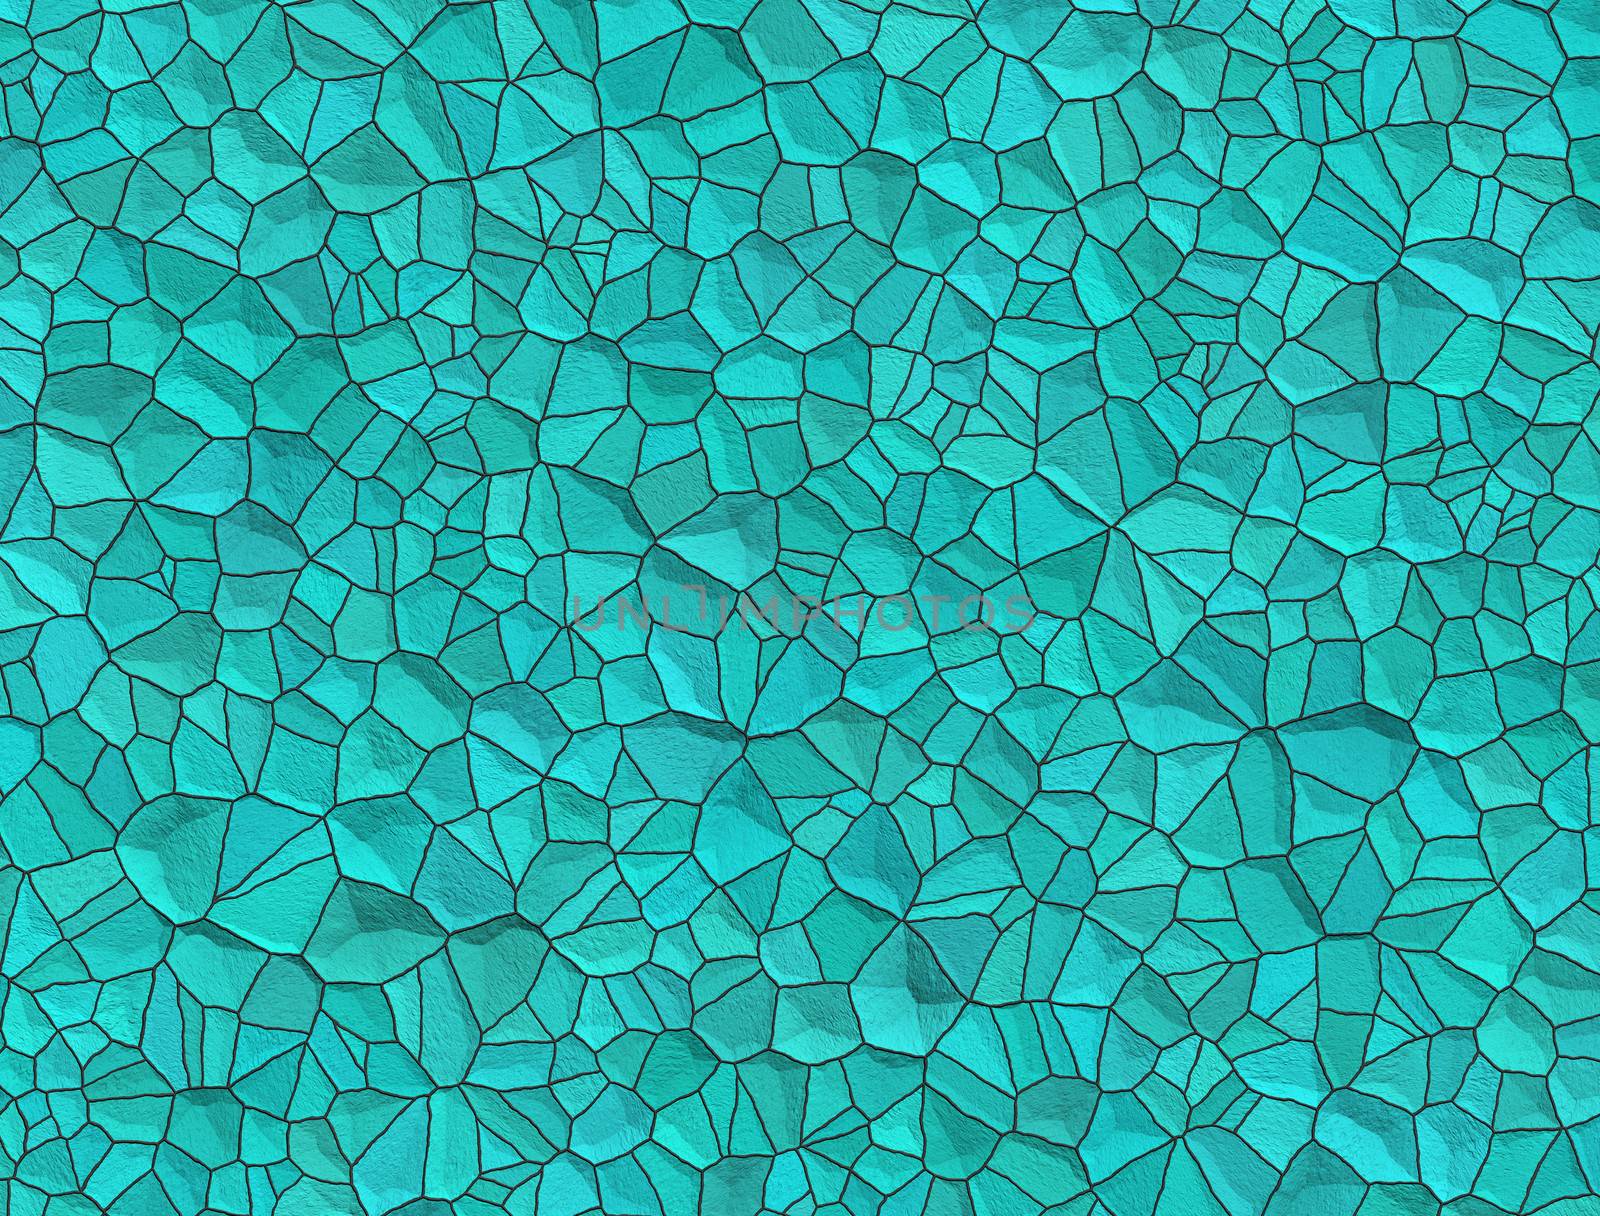 Texture of polished wet turquoise gemstones